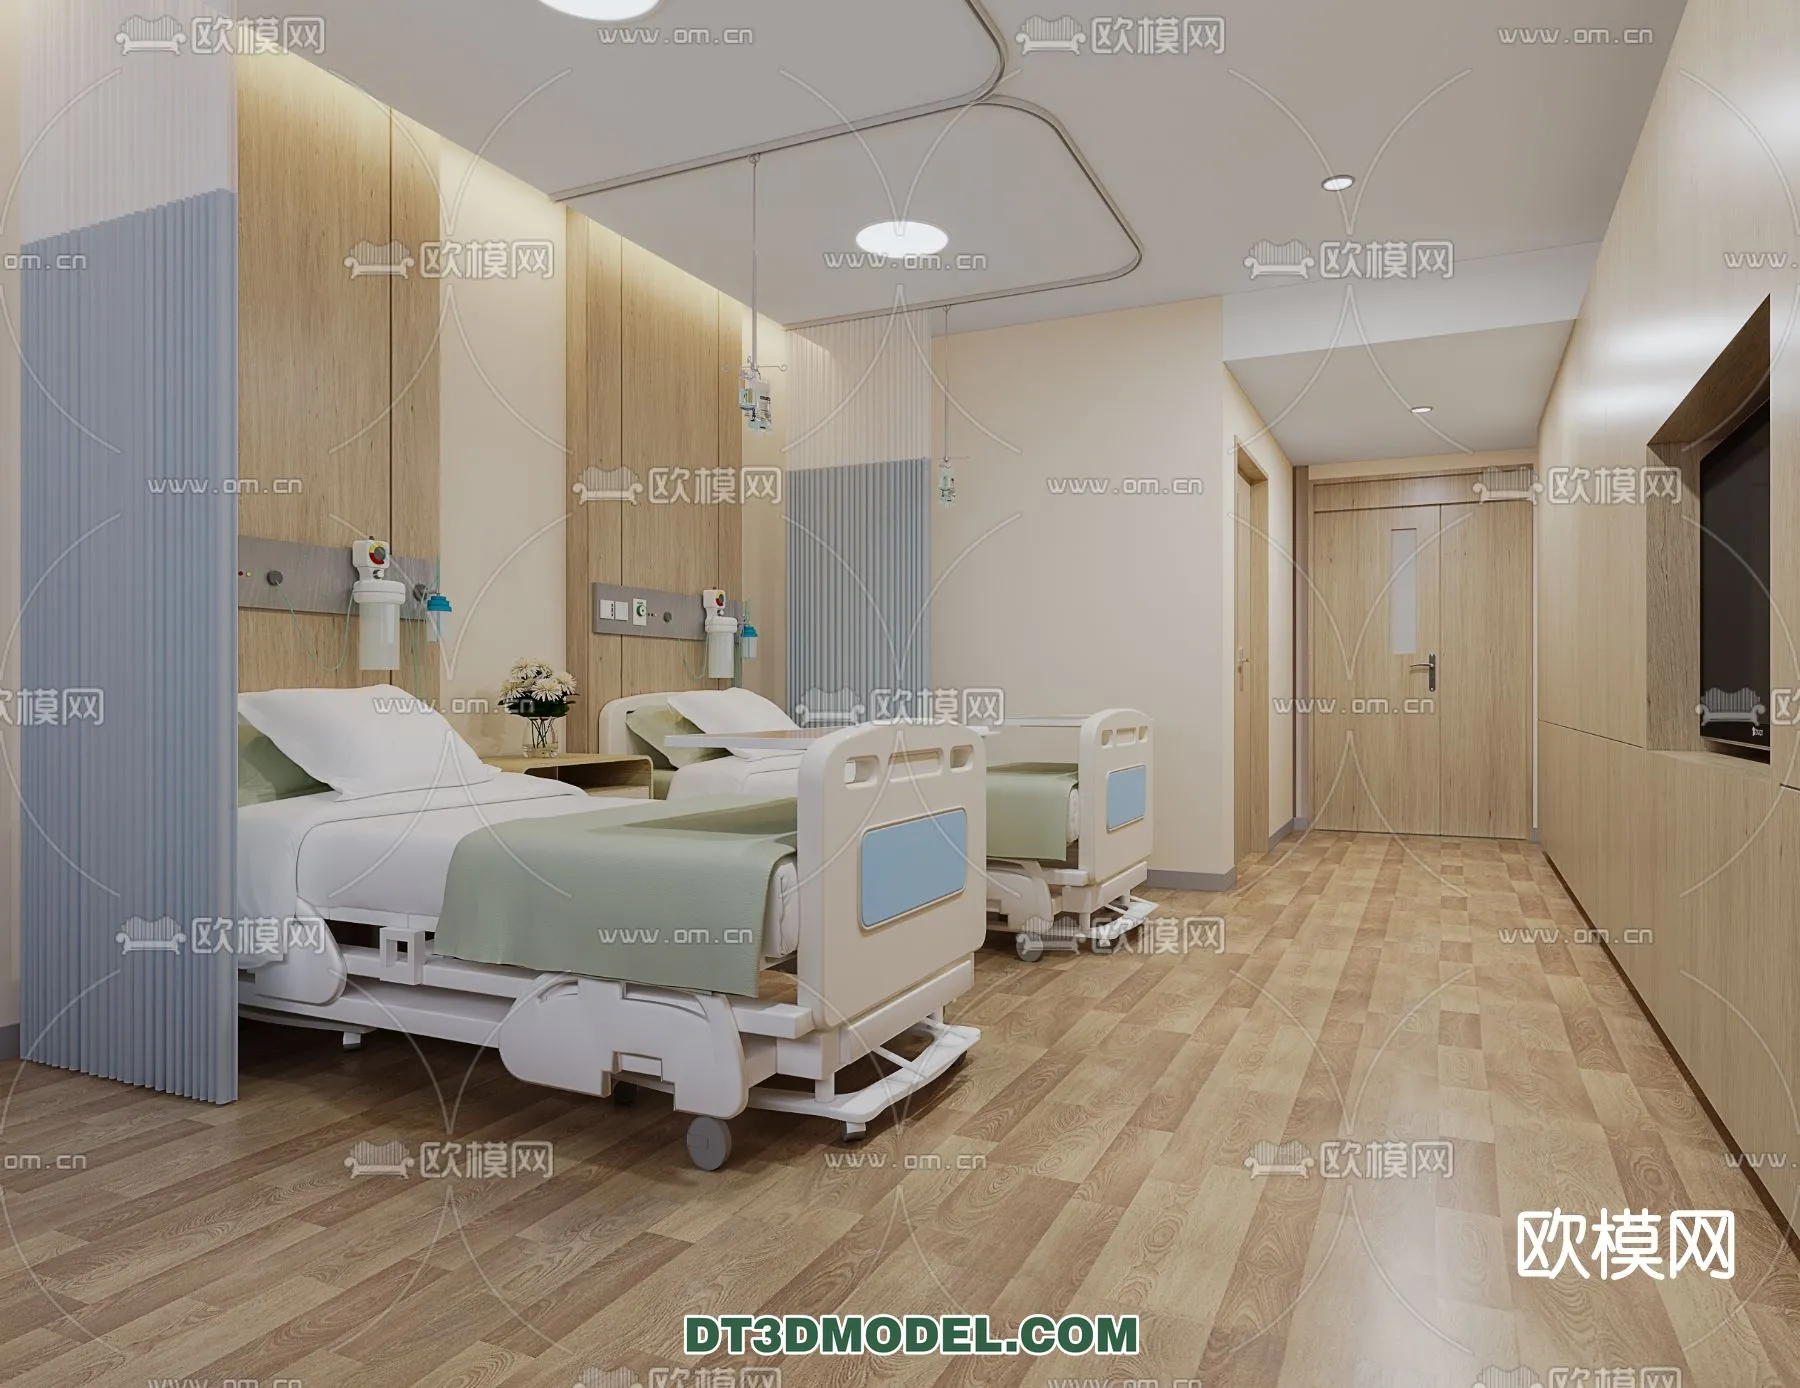 HOSPITAL 3D SCENES – MODERN – 0004